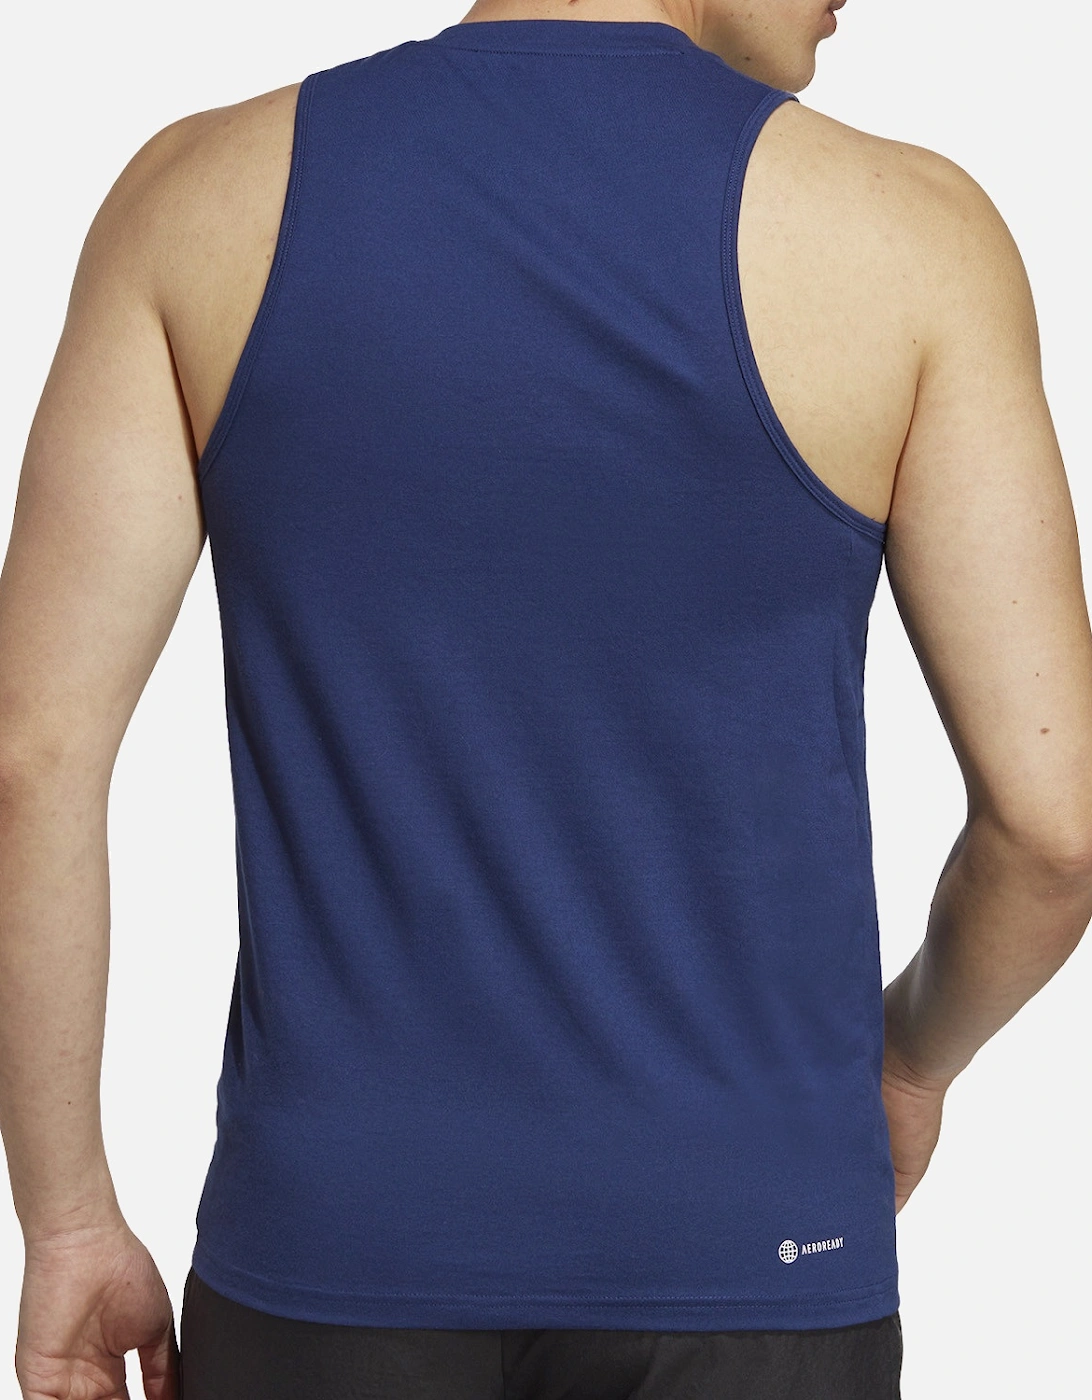 Mens Sleeveless Training T-Shirt (Blue)